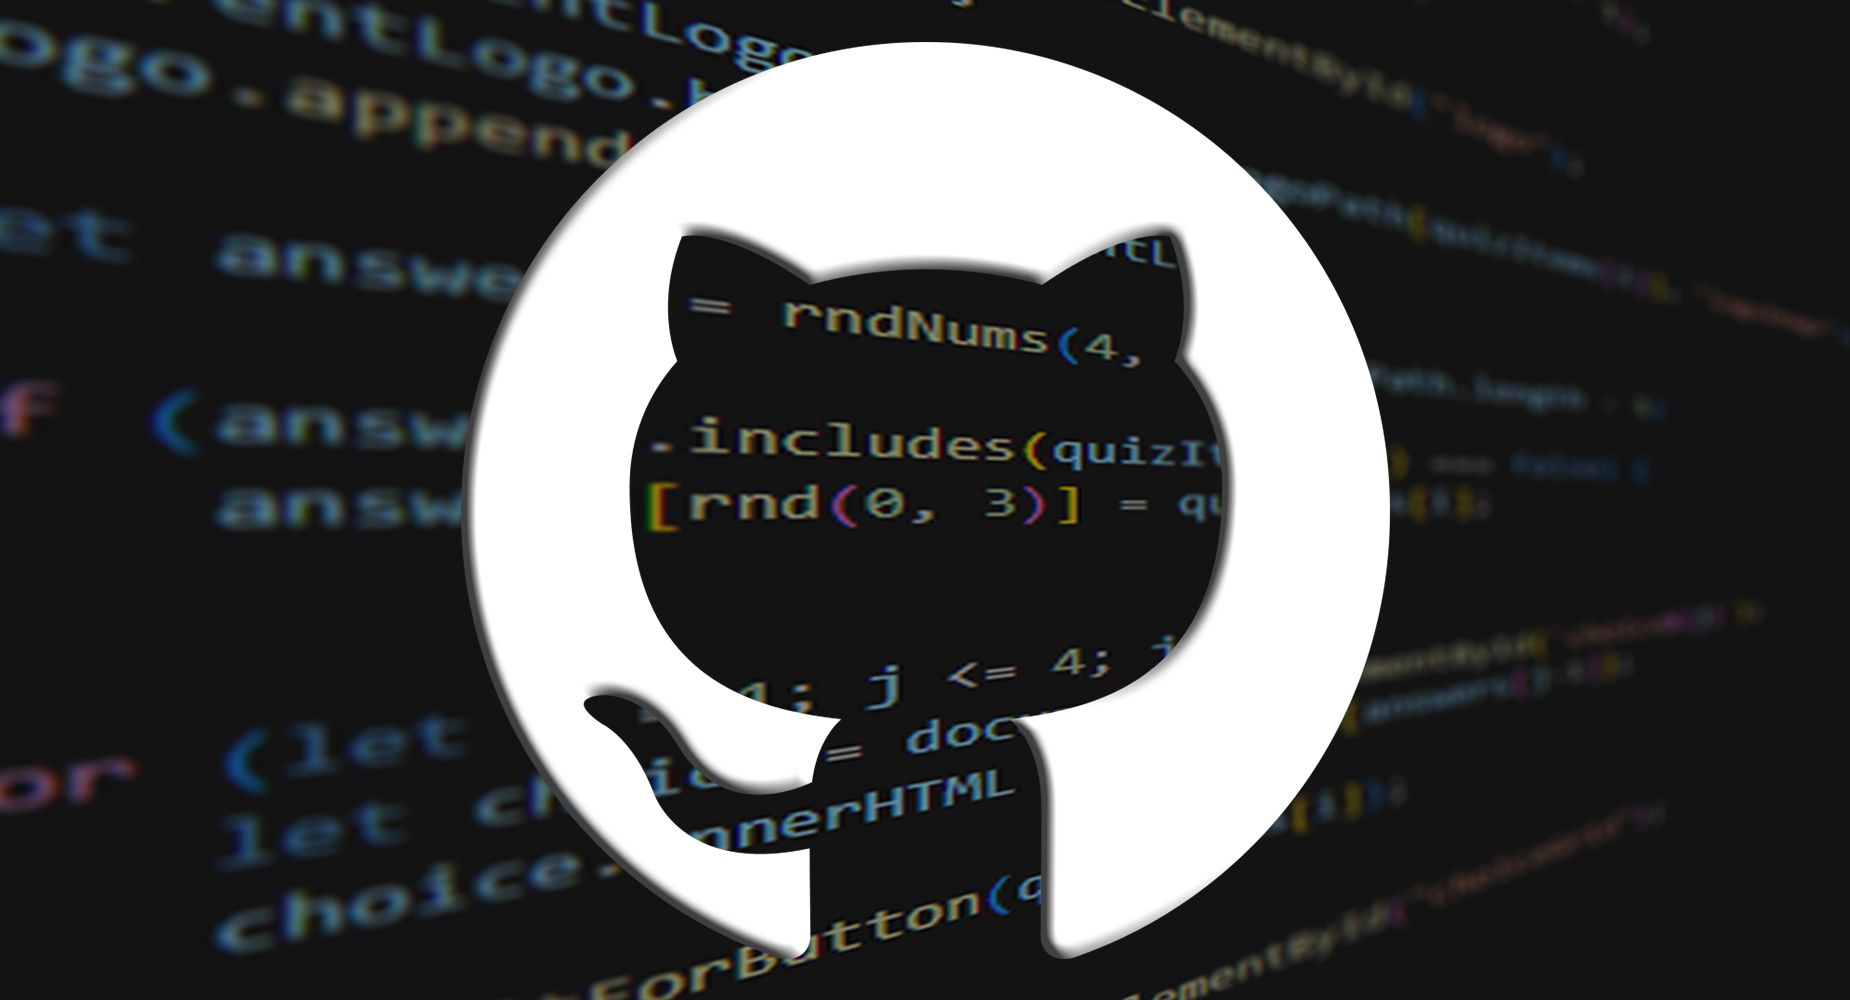 GitHub logo over image of JavaScript code